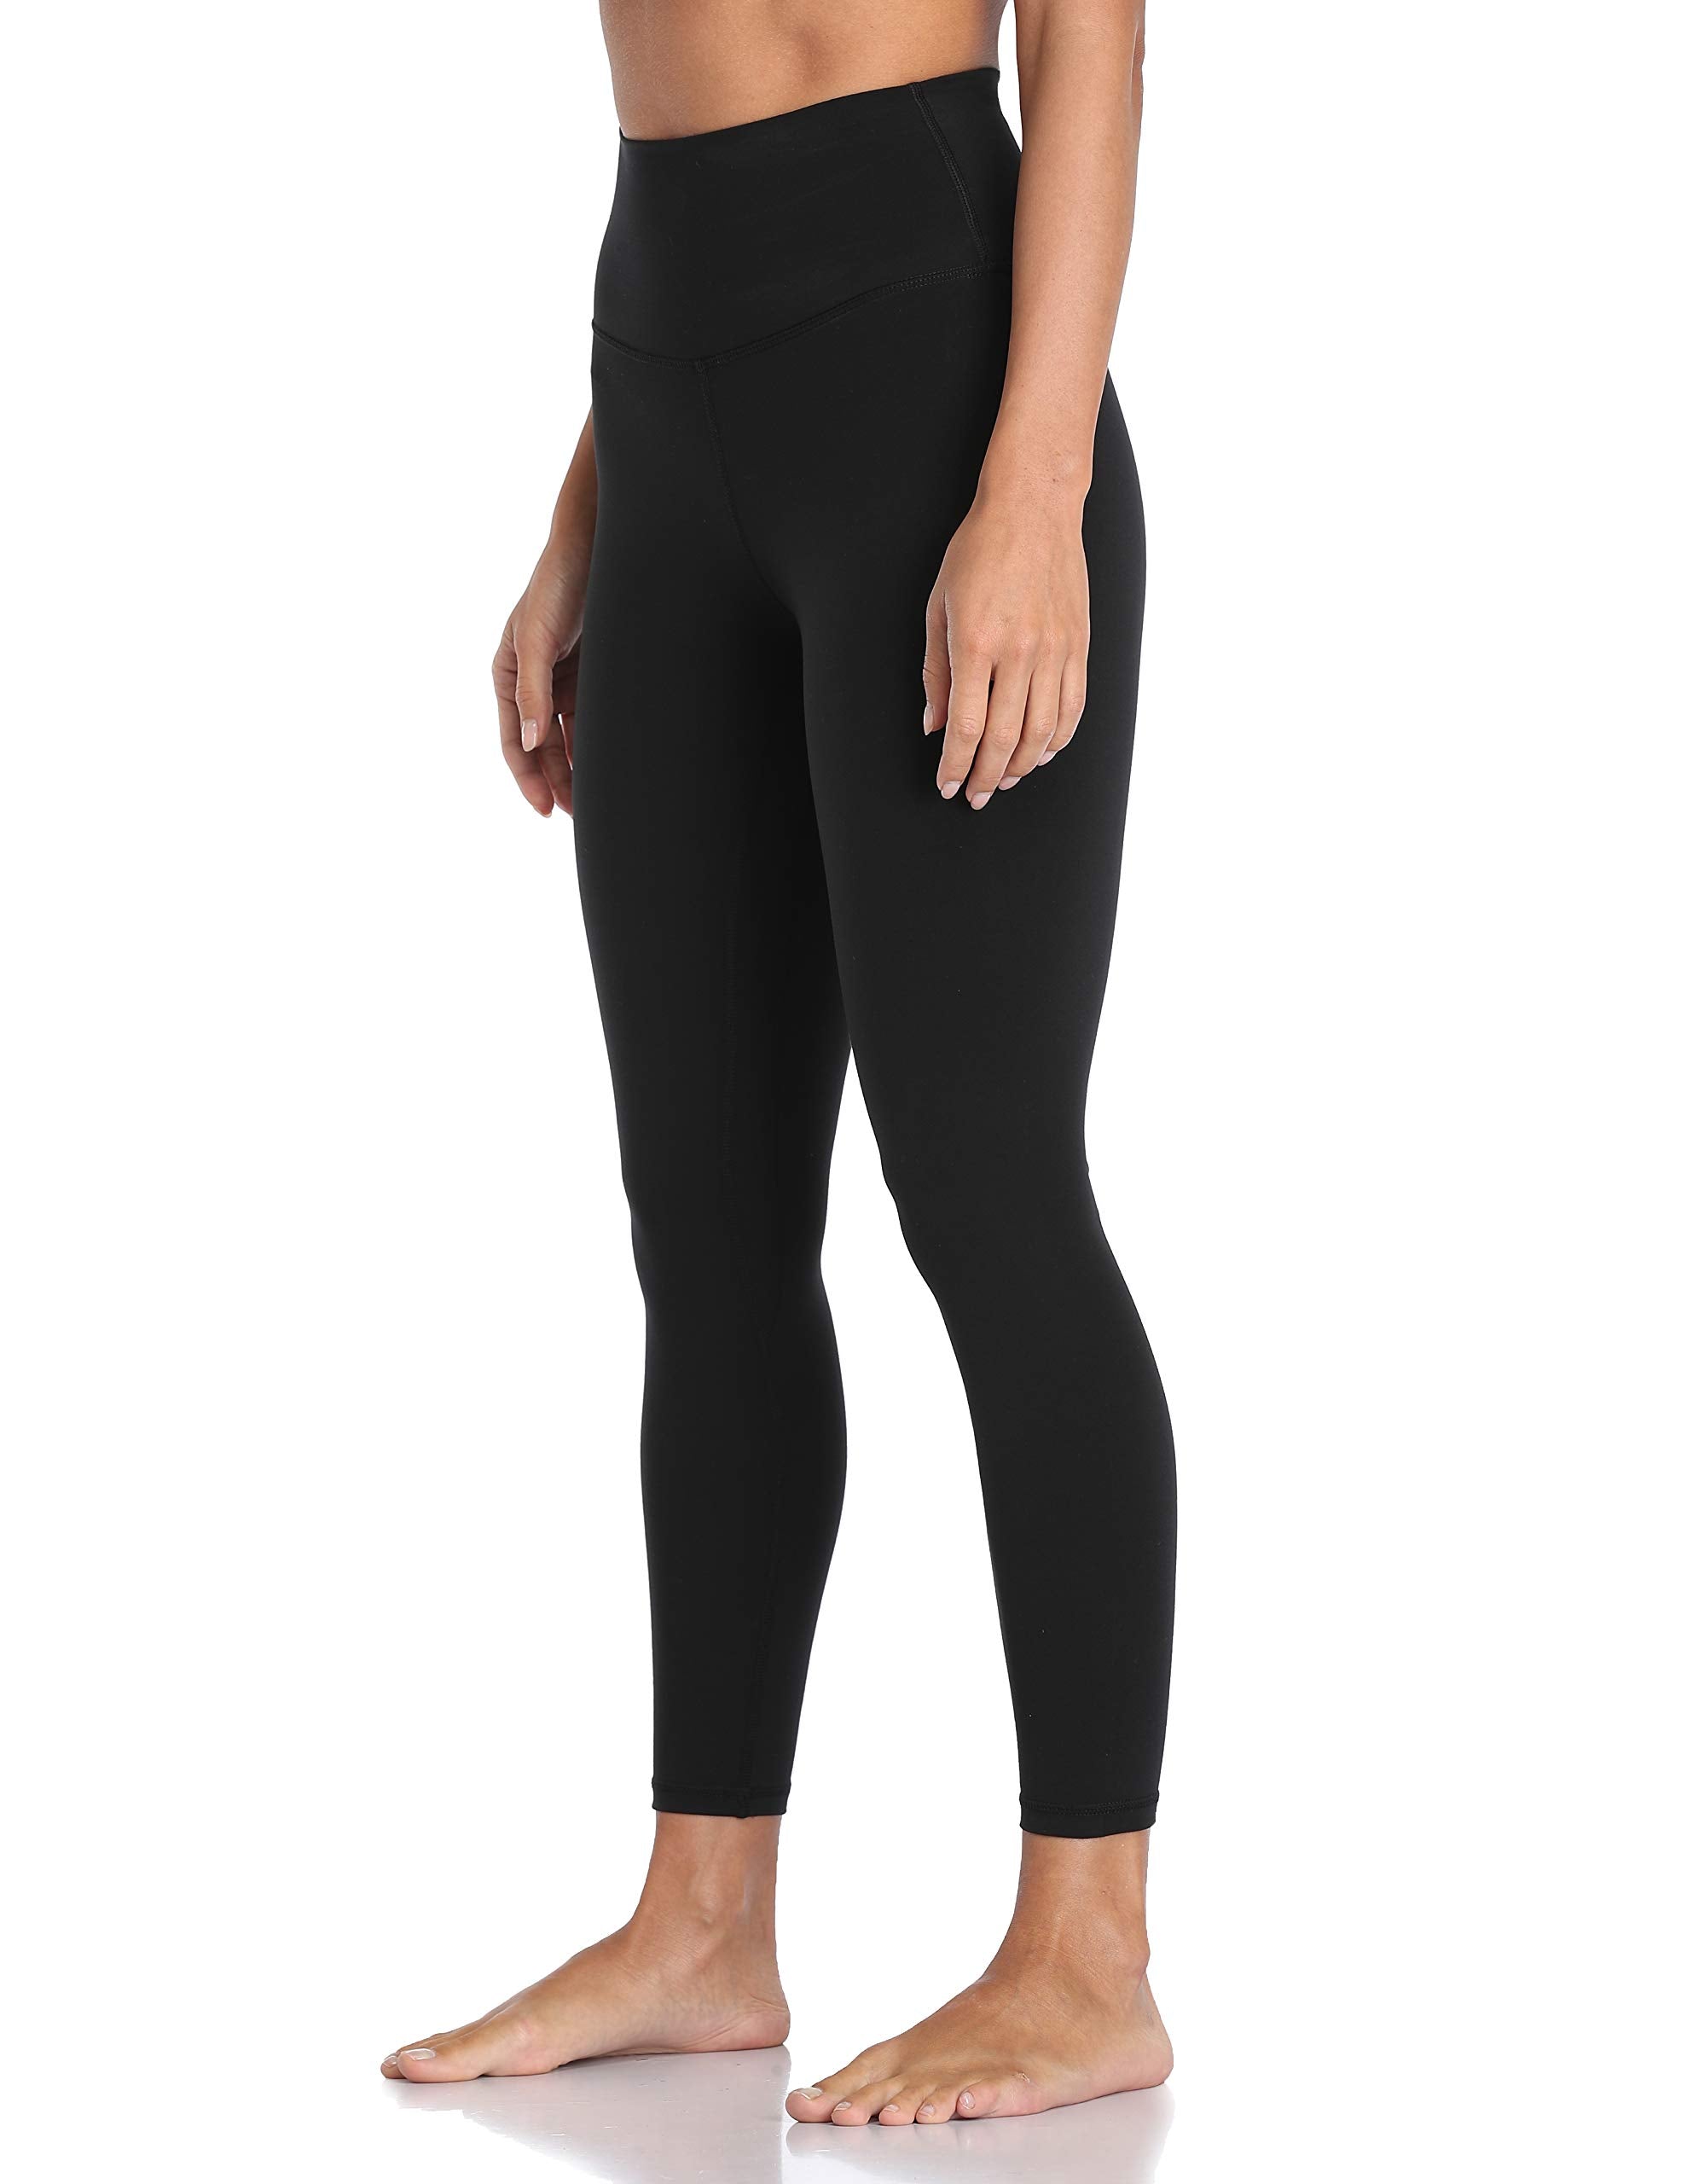 Colorfulkoala Women's High Waisted Tummy Control Workout Leggings 7/8  Length Ultra Soft Yoga Pants 25 (M, Black)